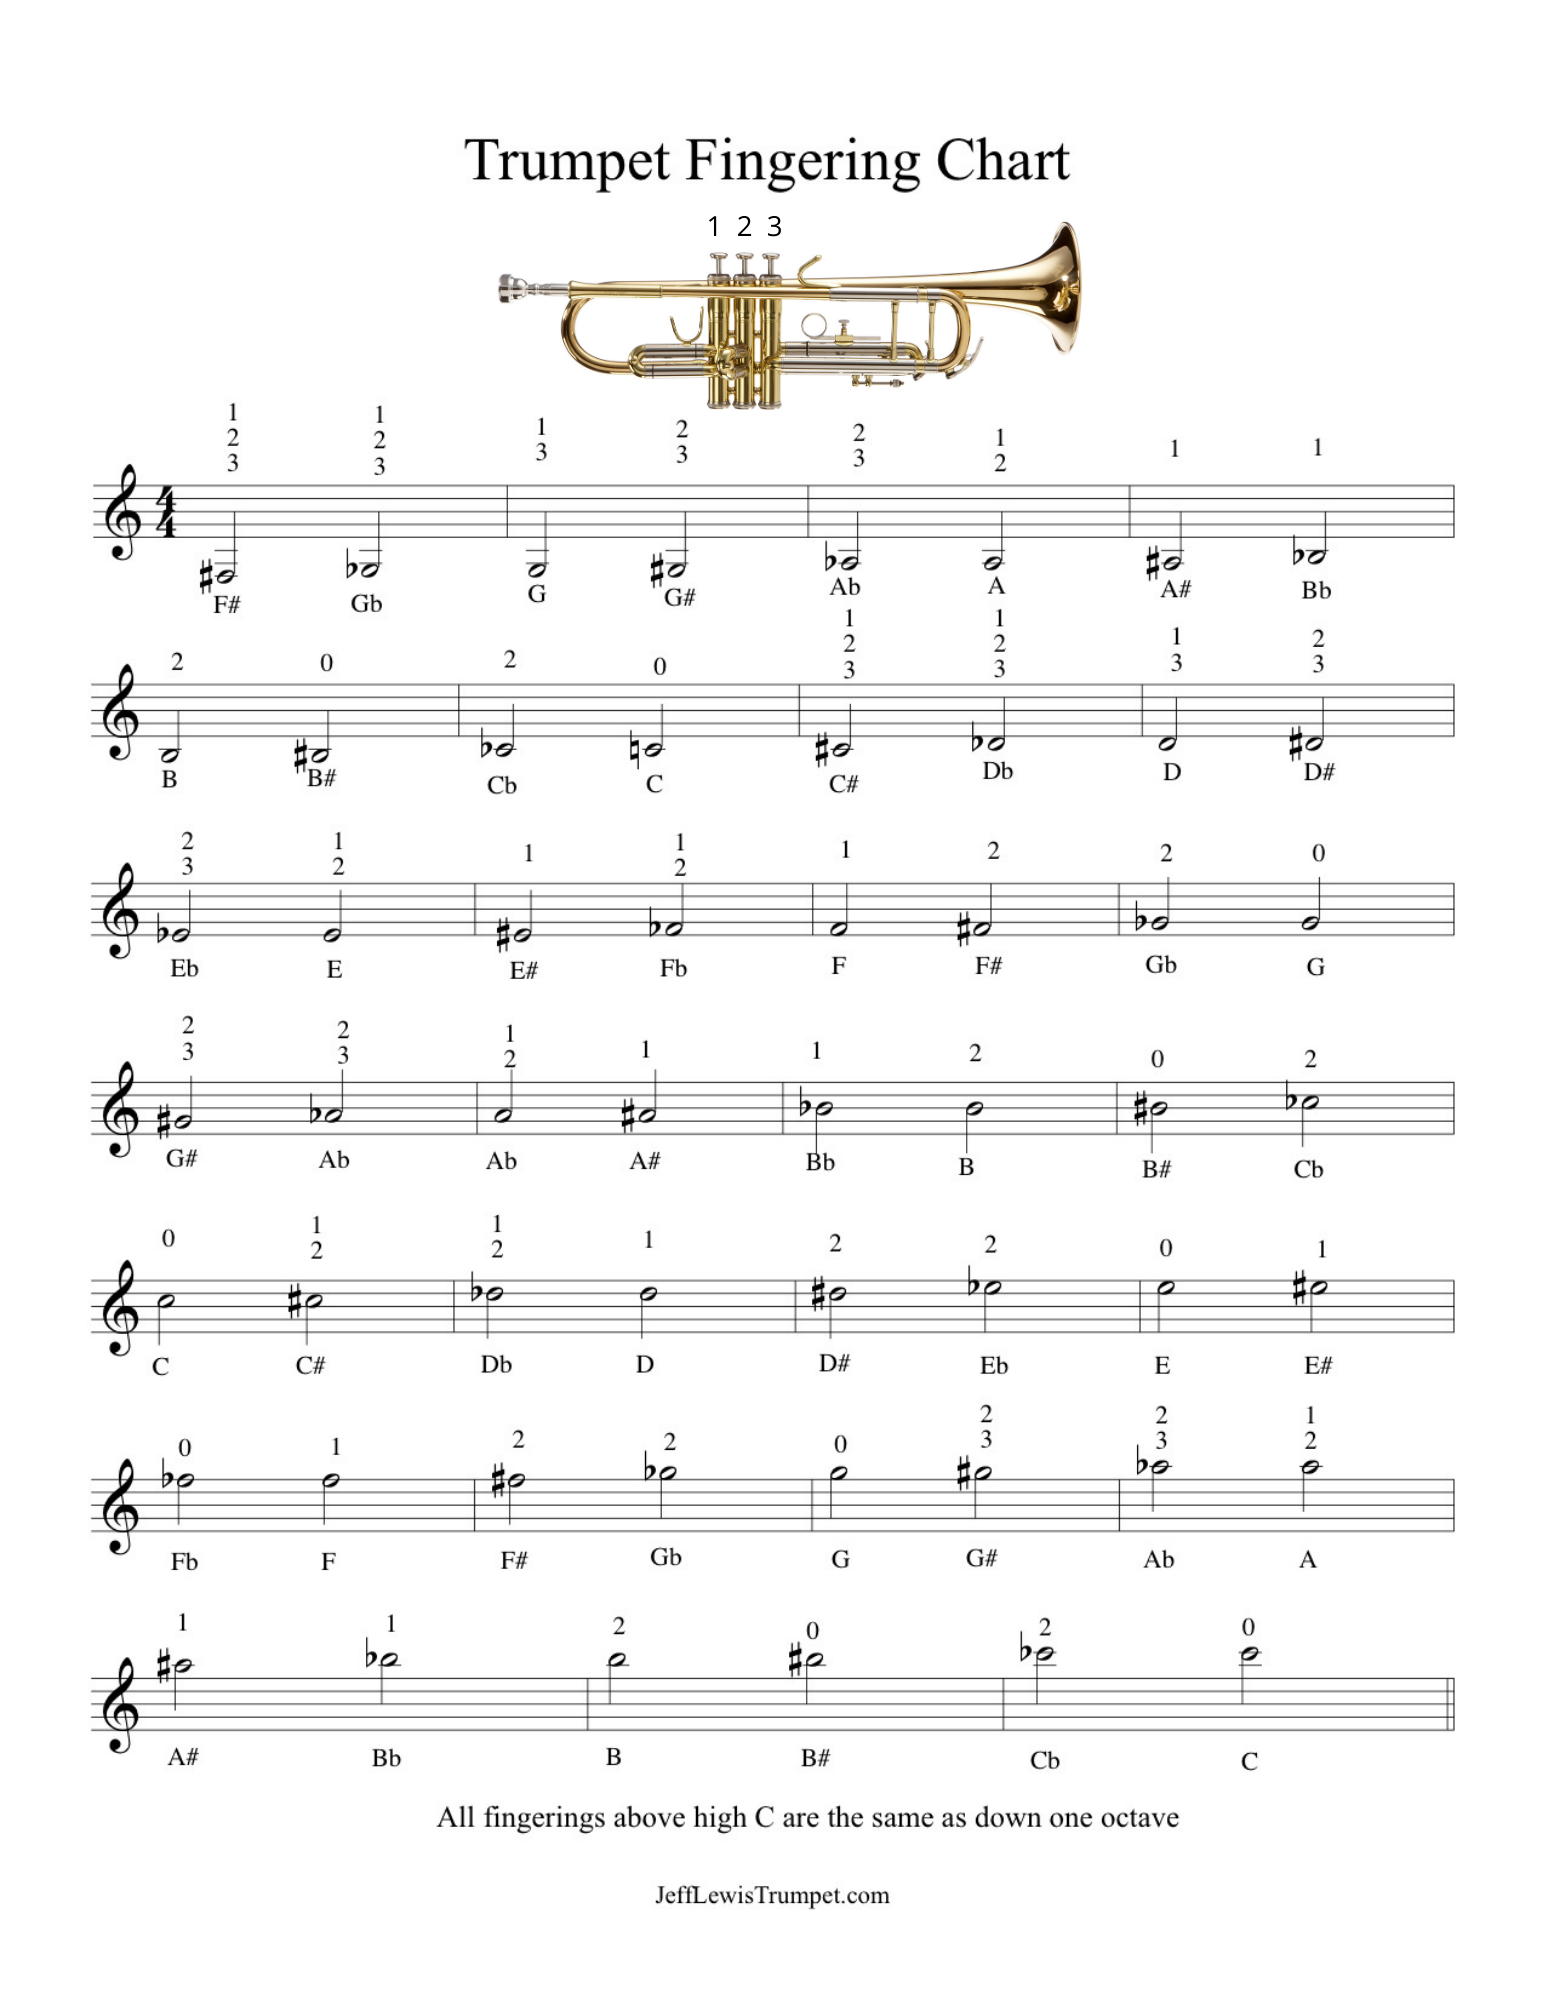 Trumpet Fingering Chart Jeff Lewis Trumpet.